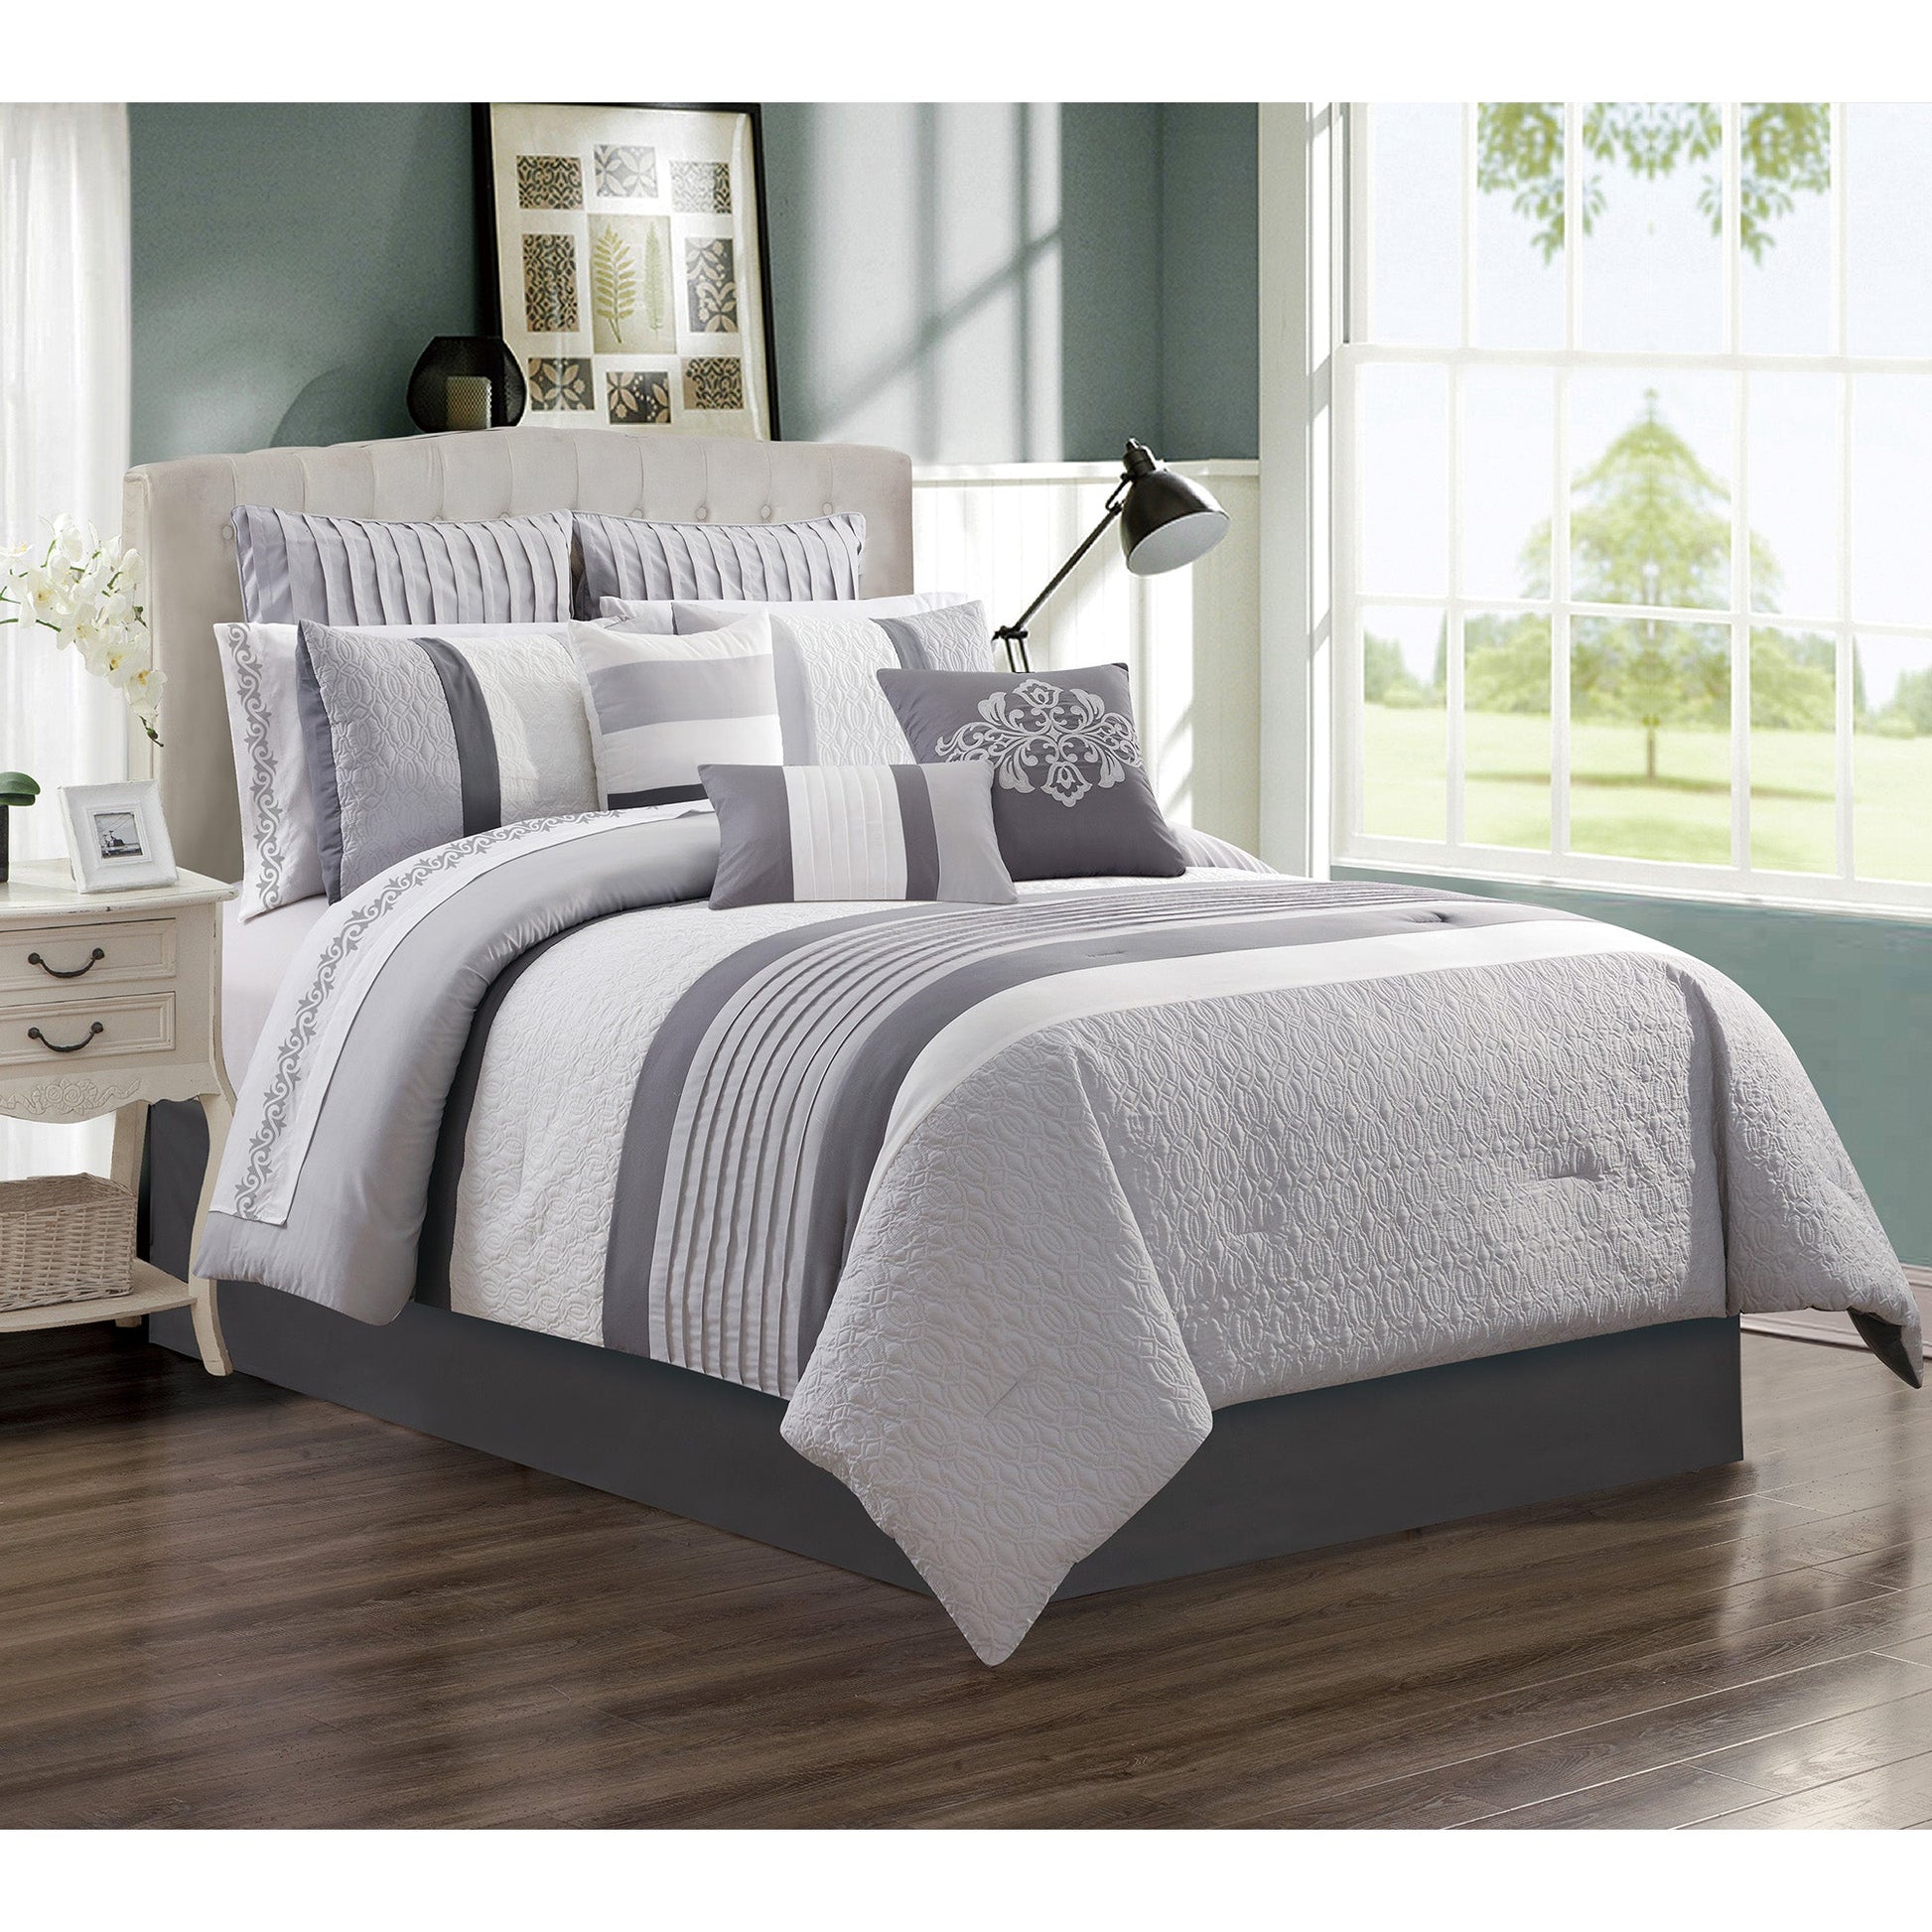 Woven Comforter Bedding Set 7Pcs D Kane - DecoElegance - Bedding Comforter Set